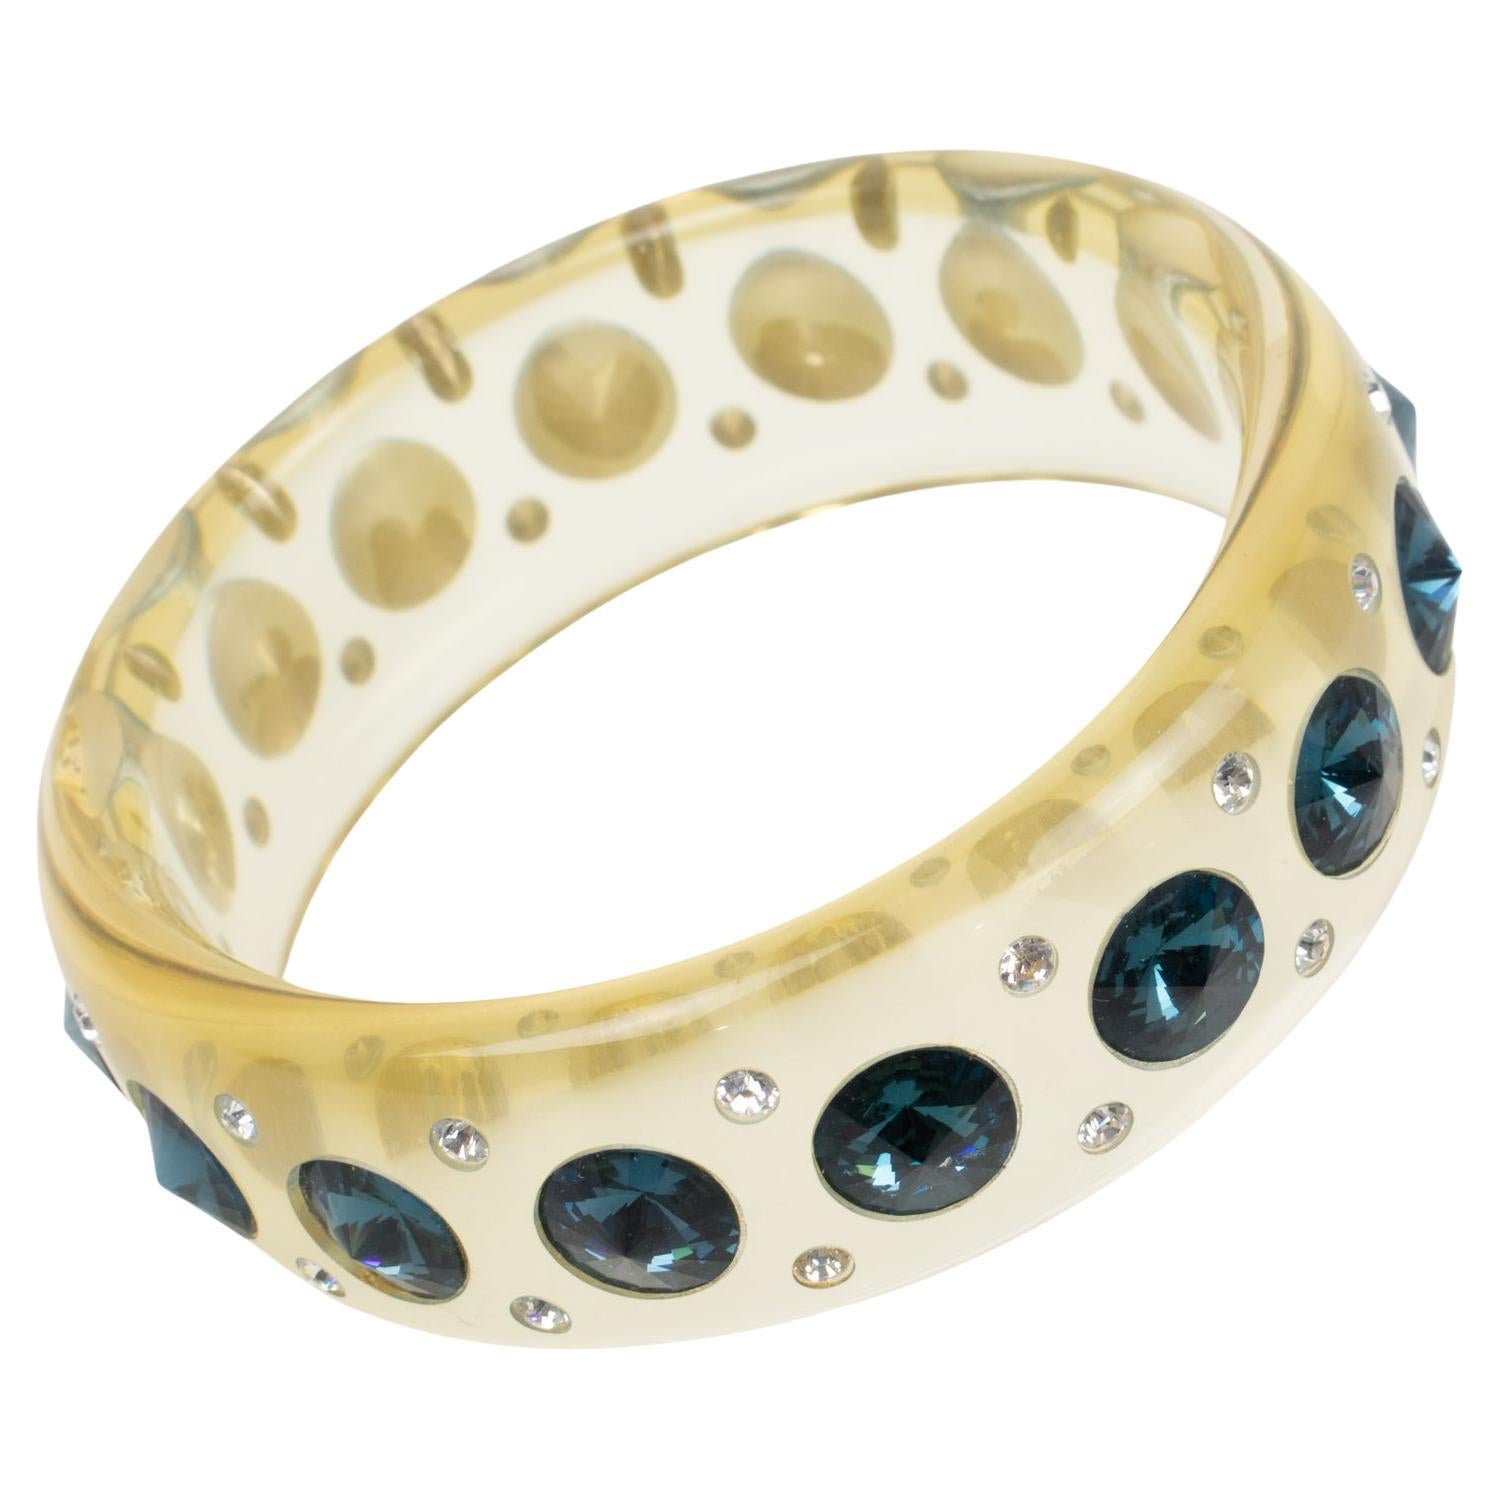 Clear Lucite Bracelet Bangle with Denim Blue Crystal Rhinestones